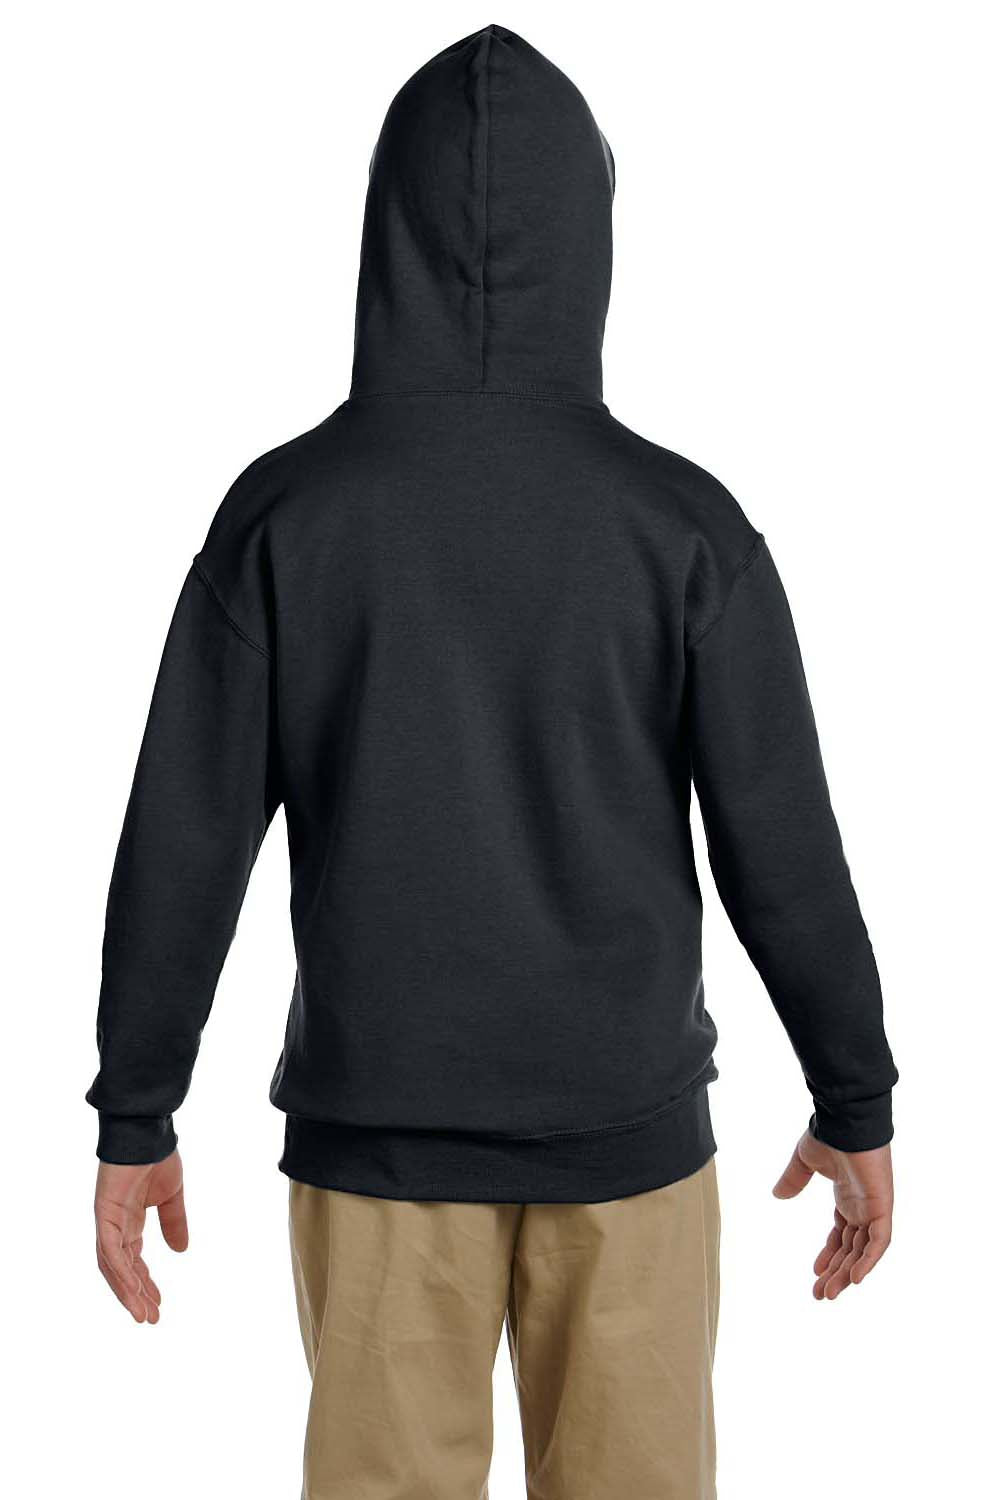 Jerzees 996Y Youth NuBlend Fleece Hooded Sweatshirt Hoodie Charcoal Grey Back